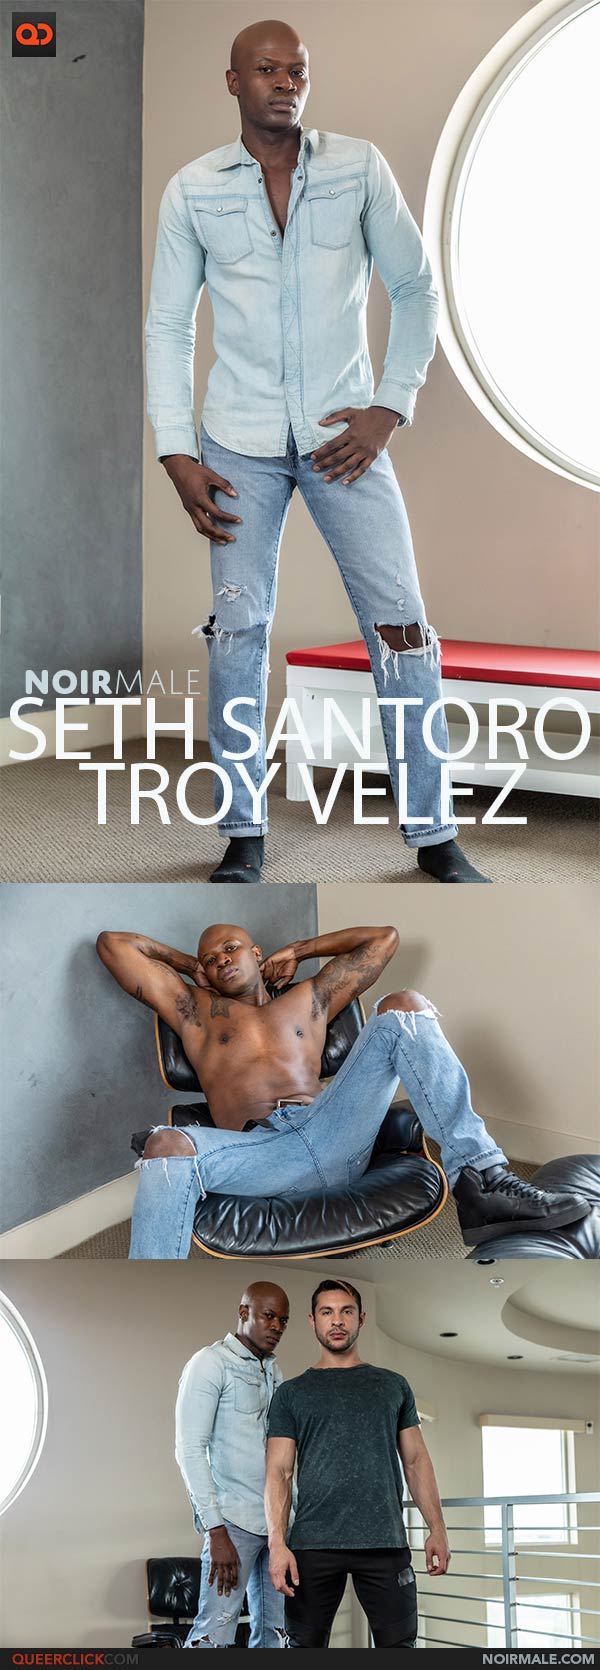 NoirMale: Troy Velez and Seth Santoro